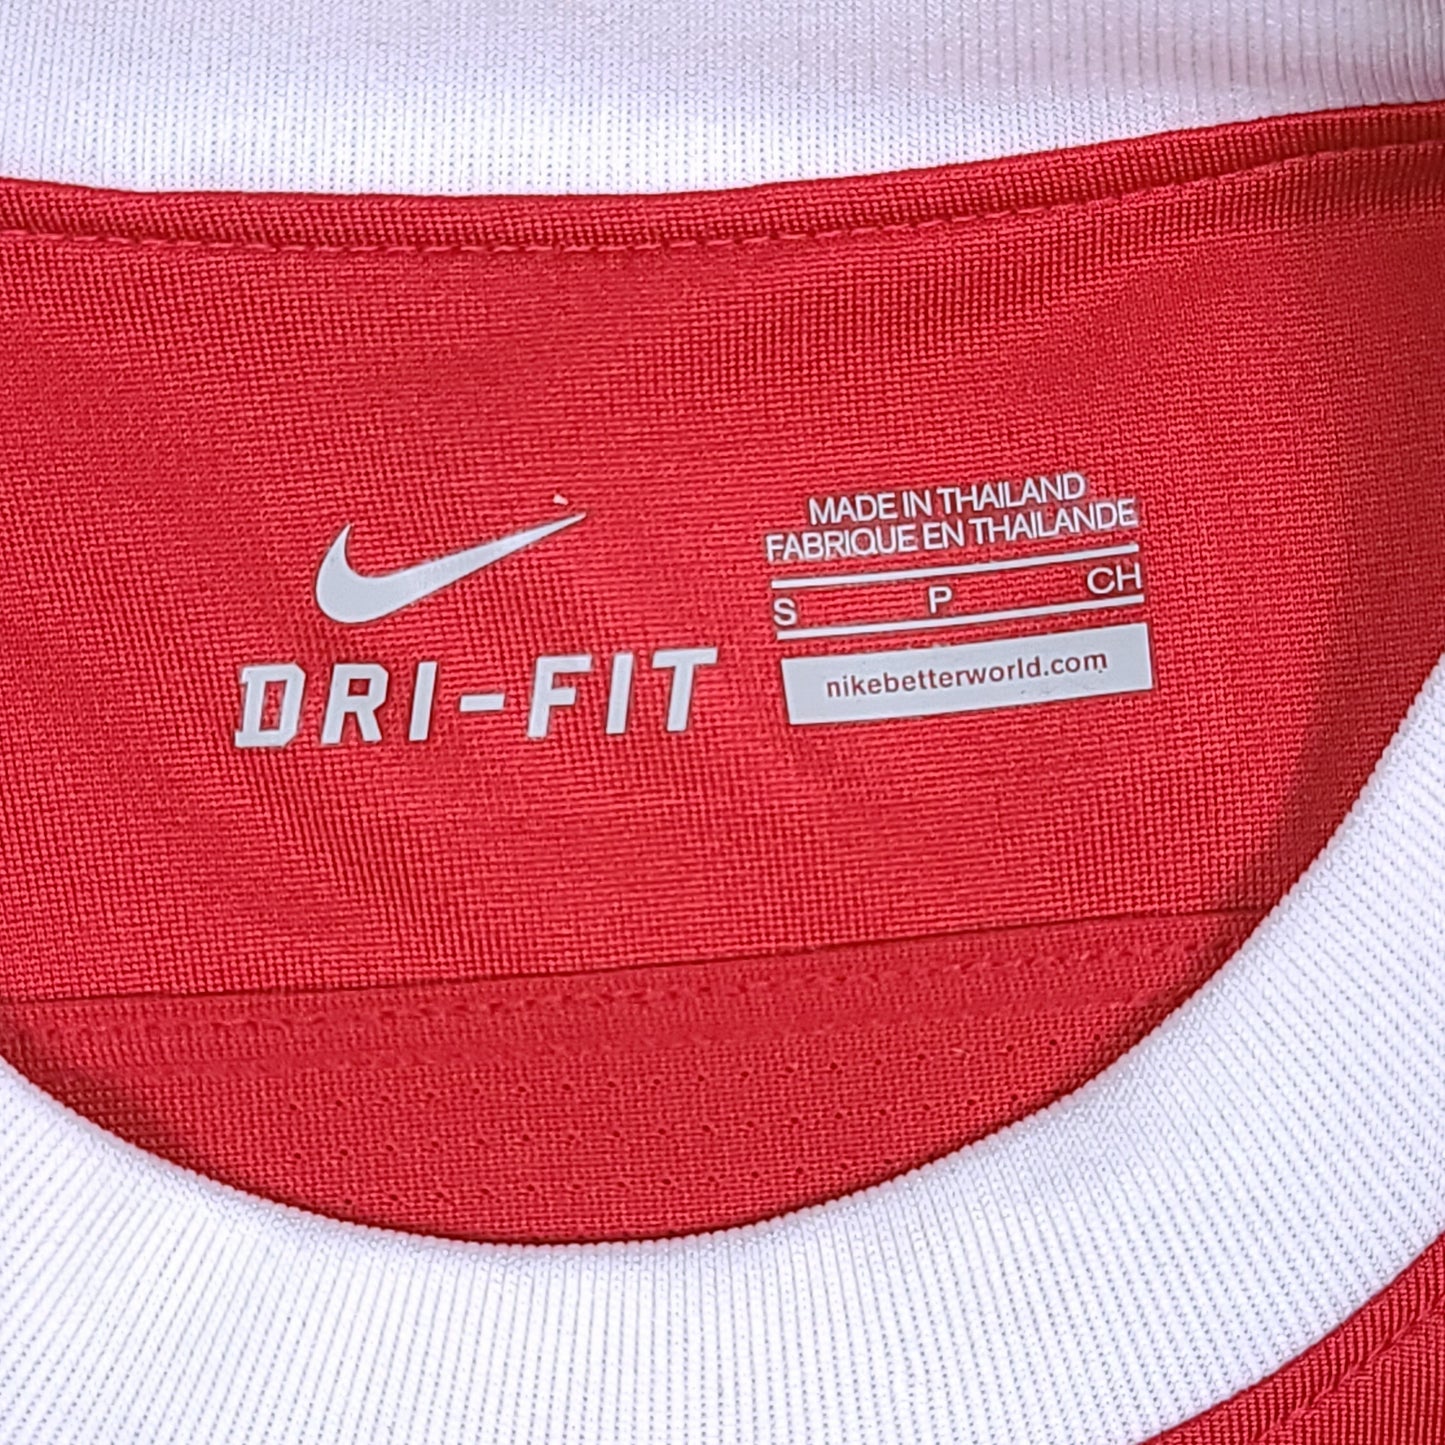 Arsenal Red 2010-11 Nike Soccer Jersey